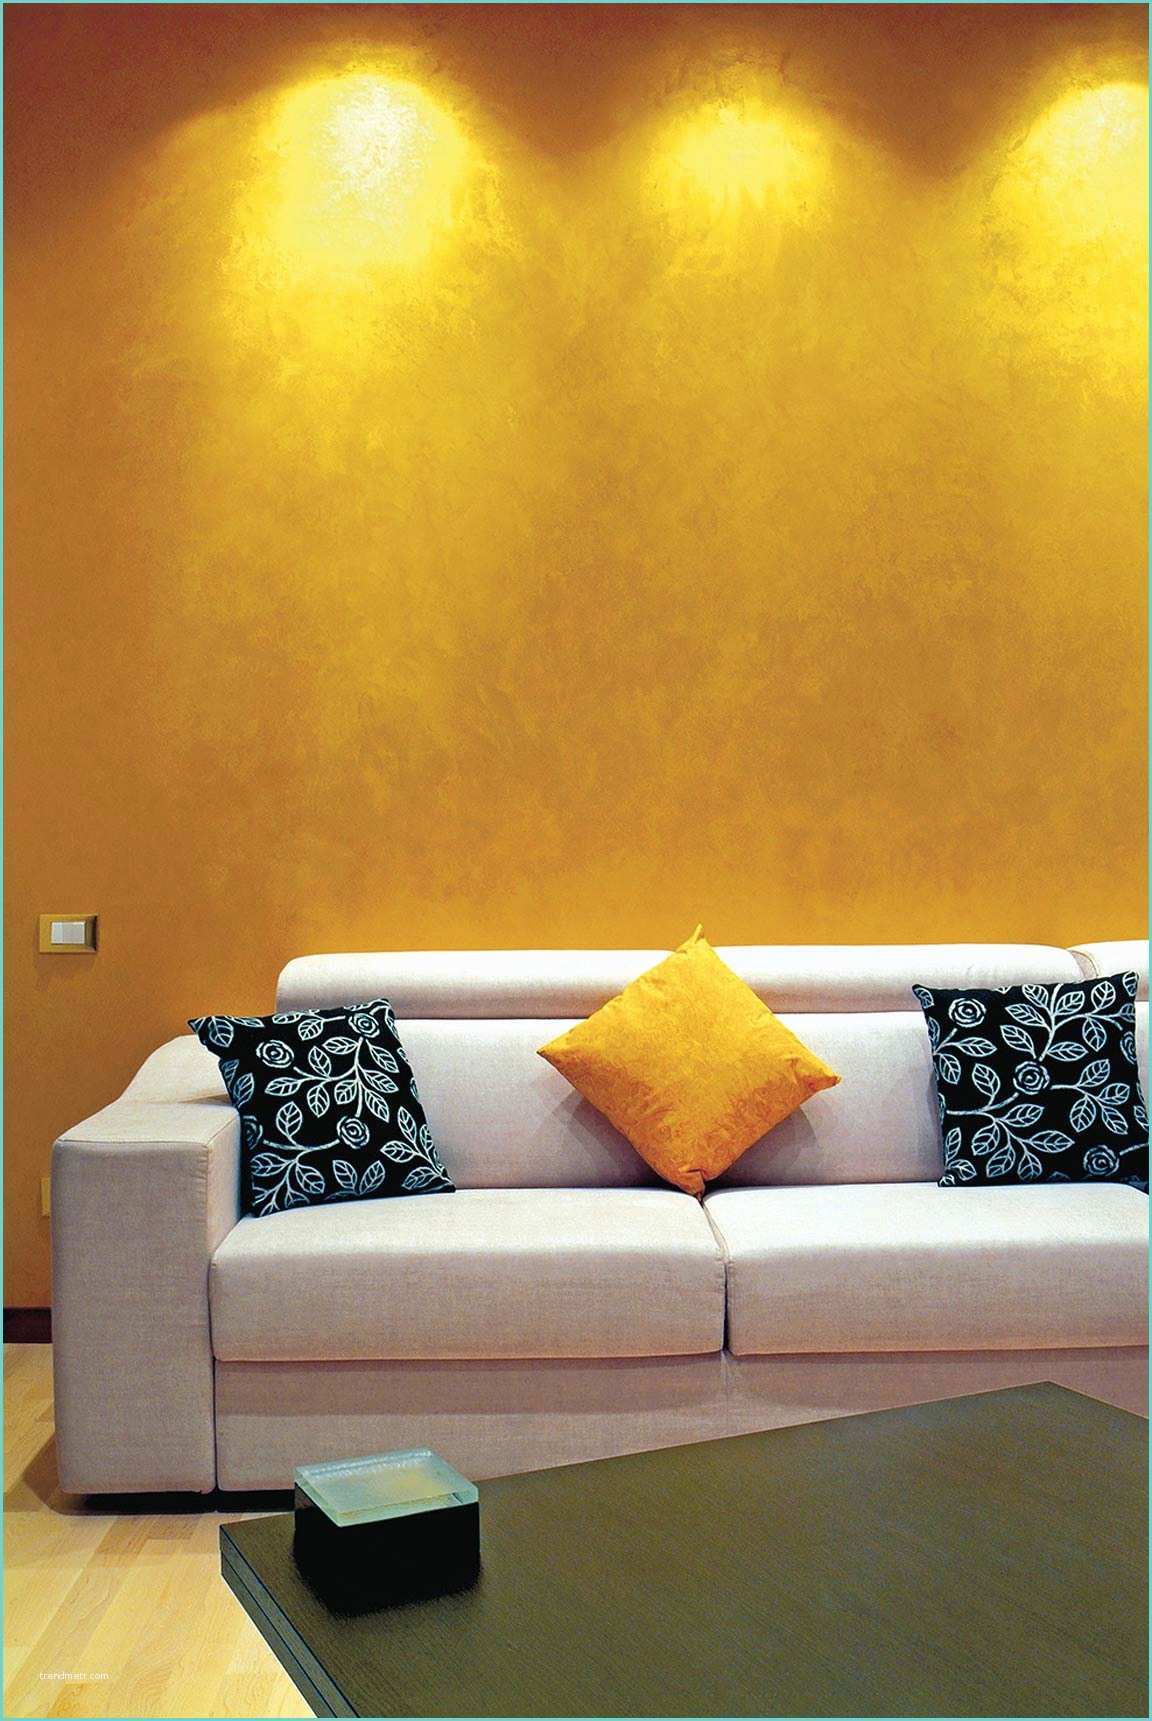 Pittura Murale oro Fabulous Tabella Dei Colori Per Pittura Murale Pitture